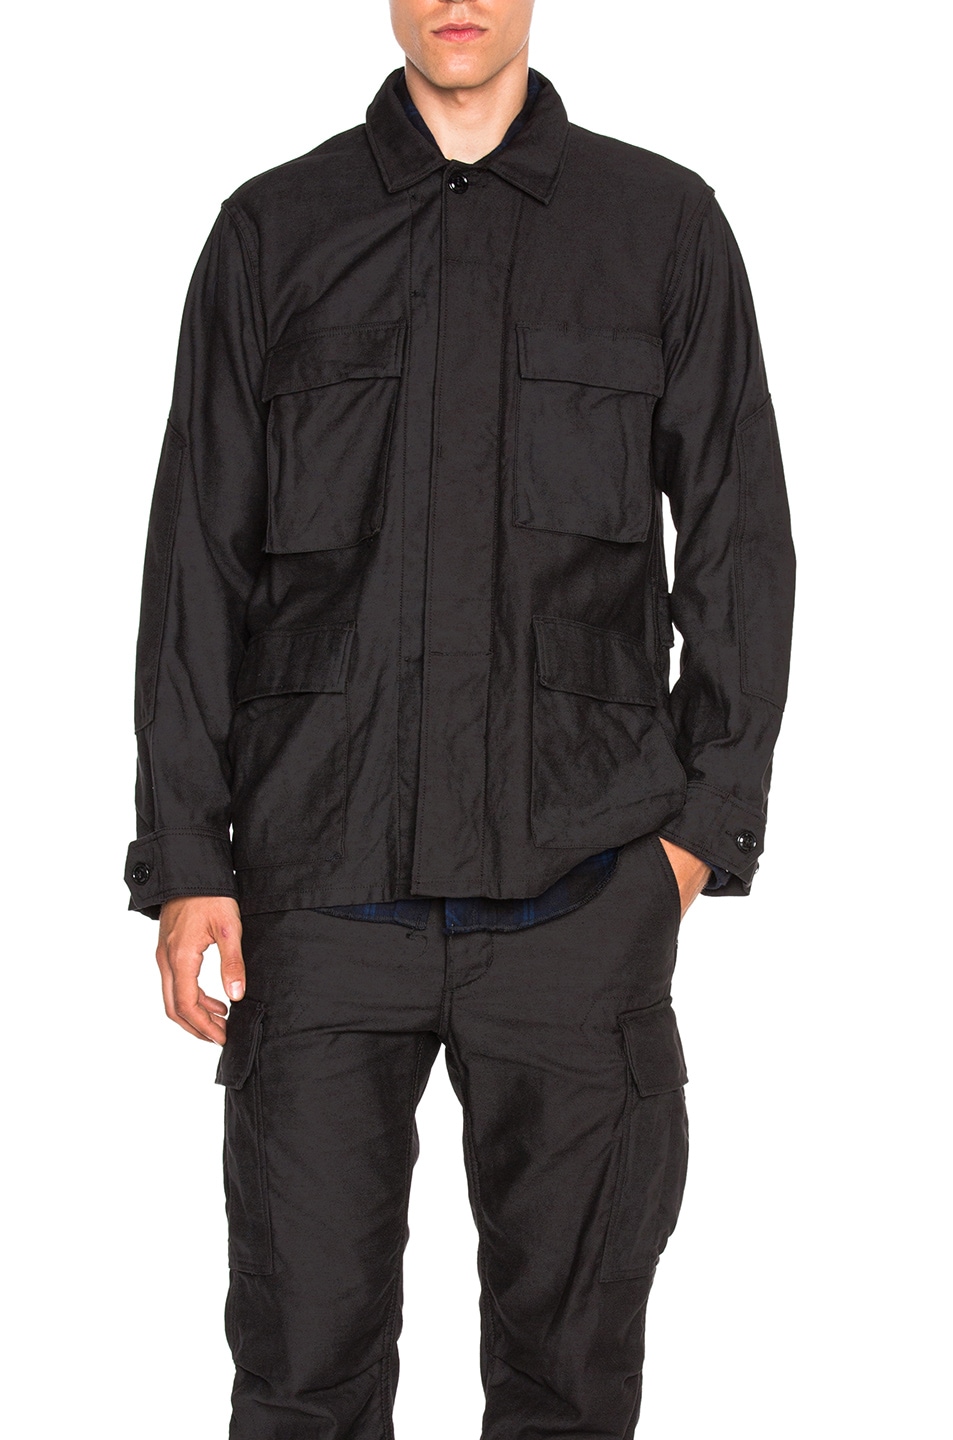 BNWT Engineered Garments BDU Jacket size Large | Styleforum